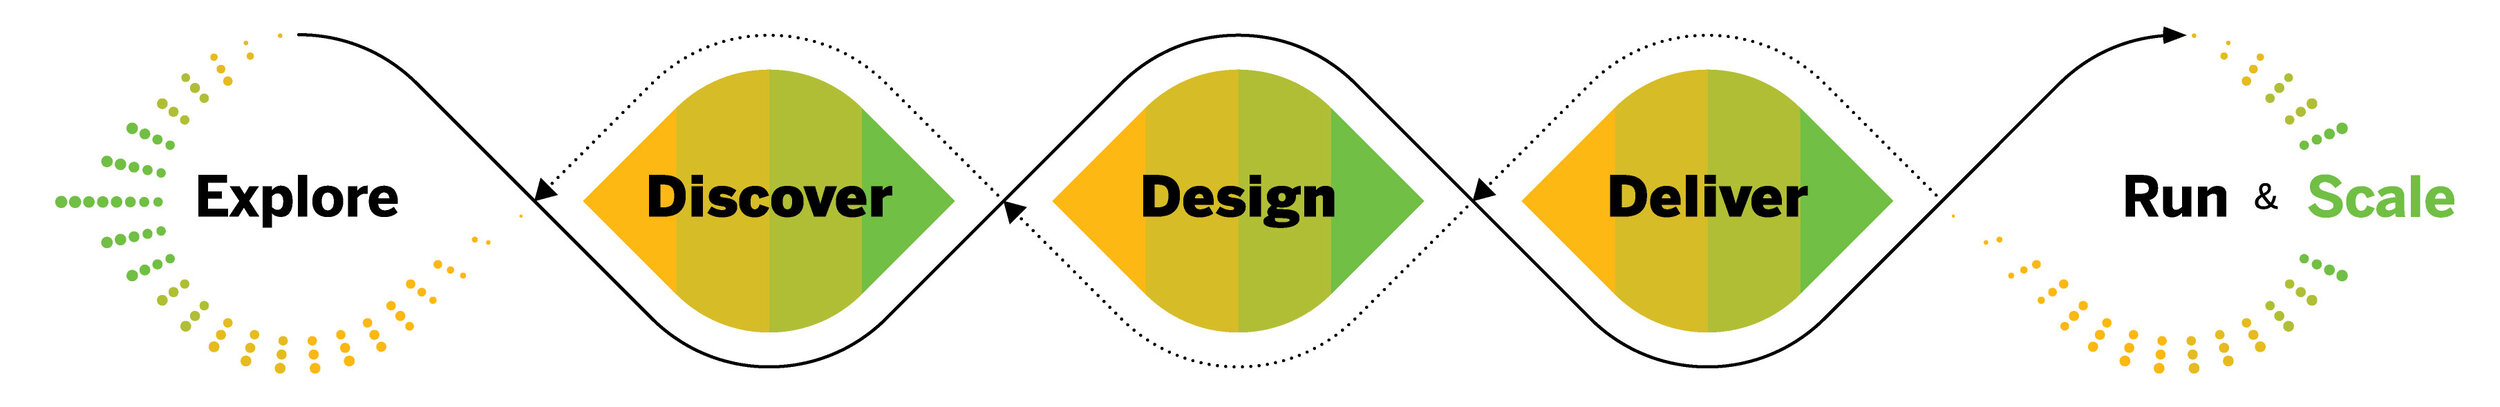 SAP Design Thinking Process_AppHaus